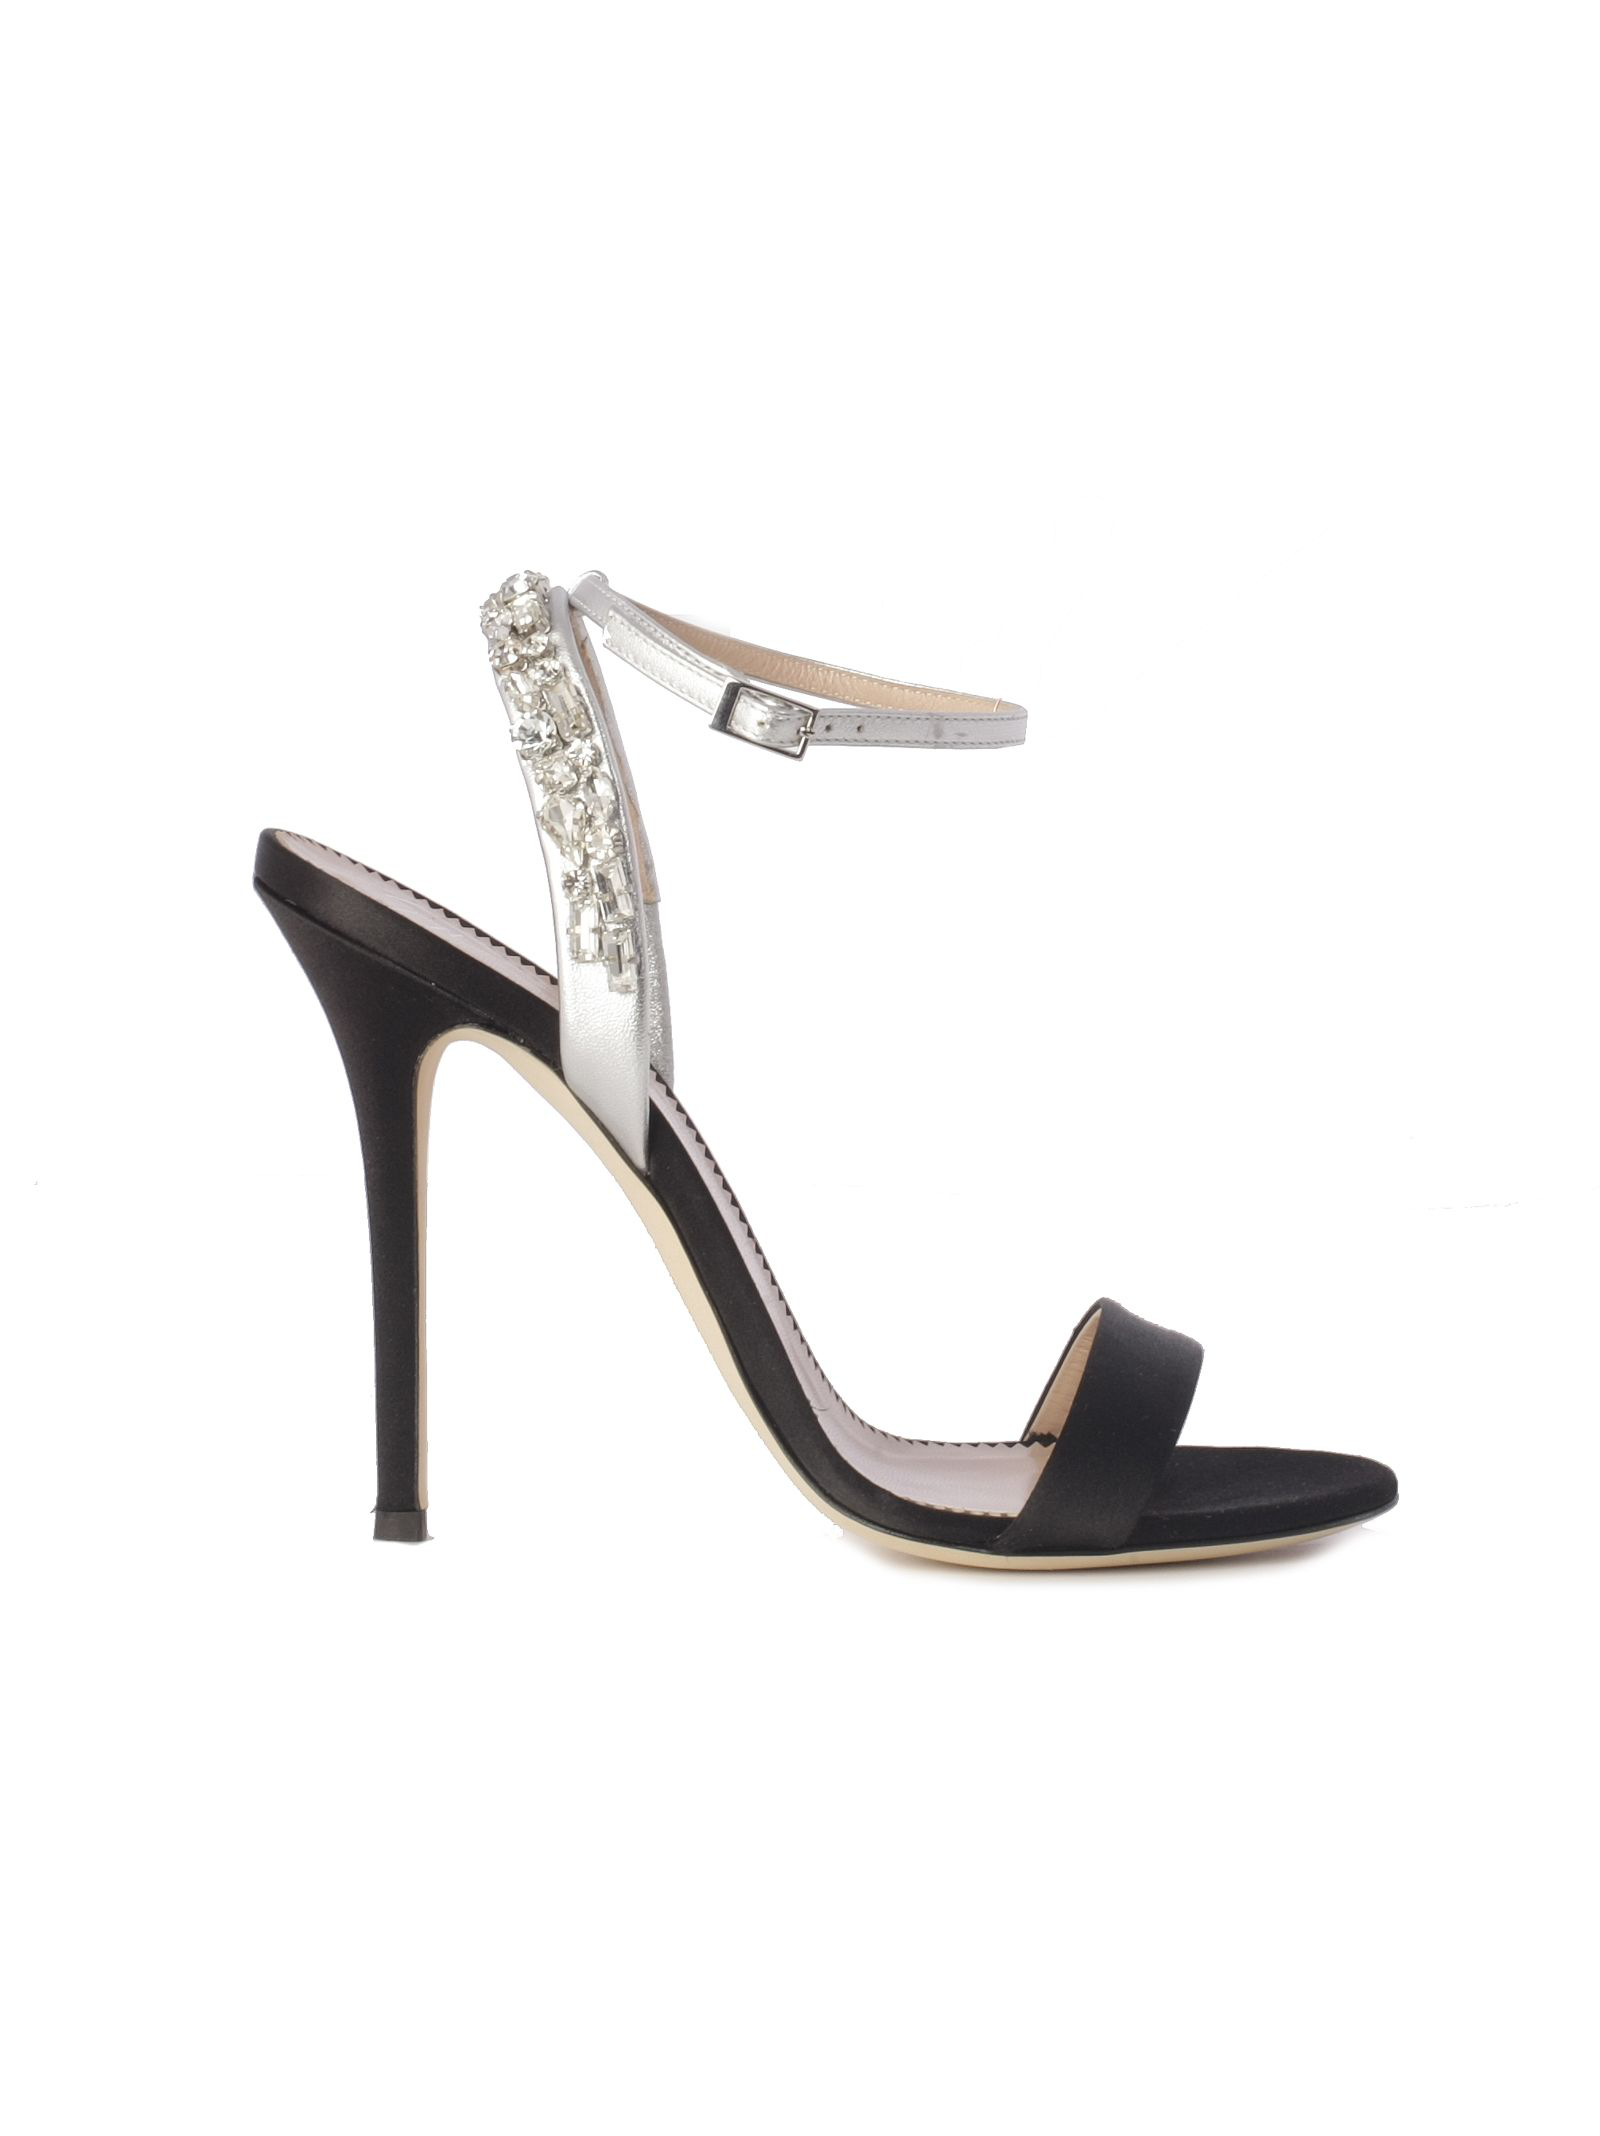 Giuseppe Zanotti Jewel Embellished Sandals In Black | ModeSens